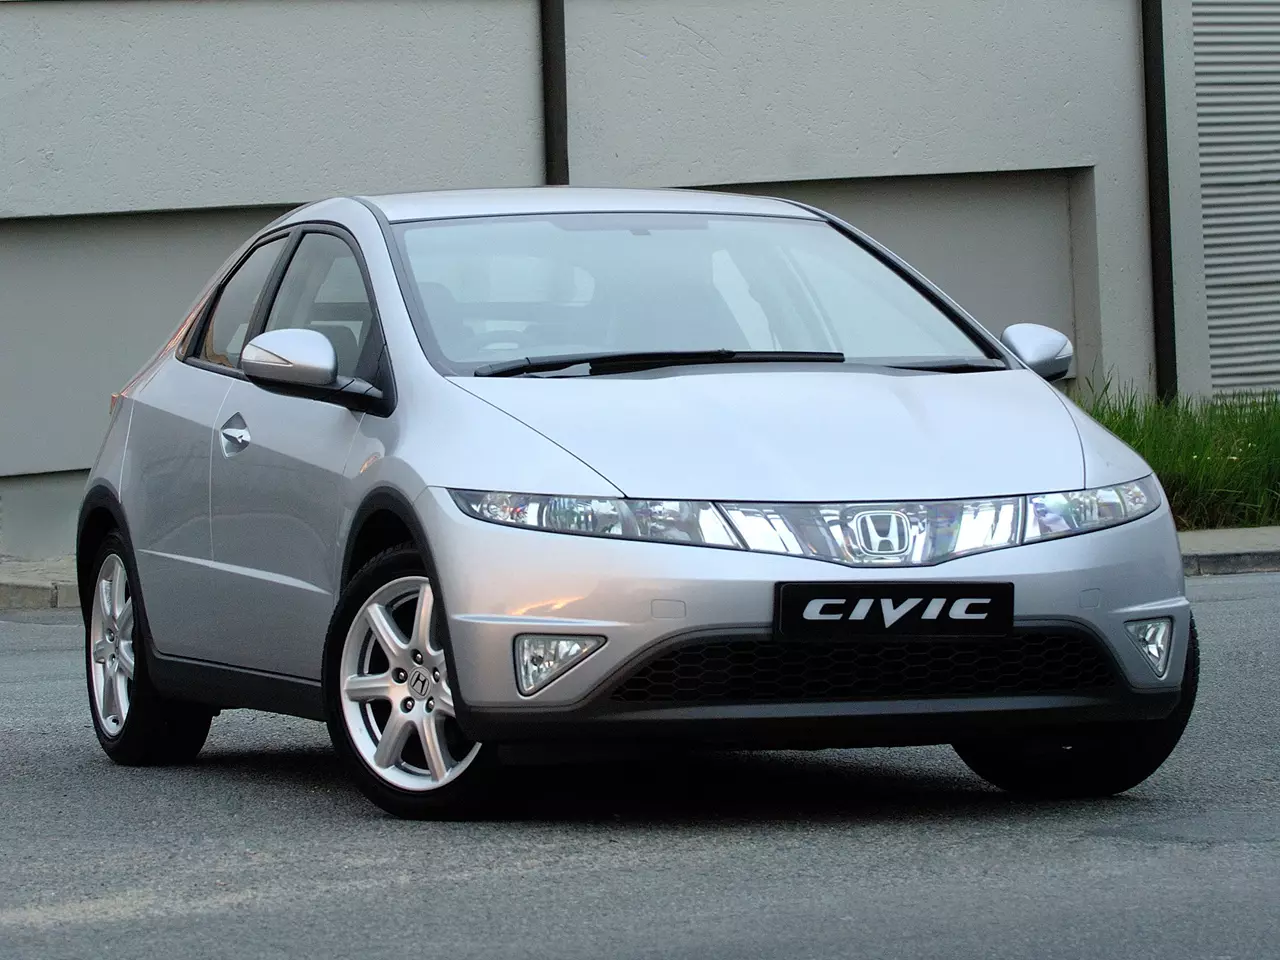 Honda Civic. ხატის ისტორია და ევოლუცია 10 თაობაში 14483_12